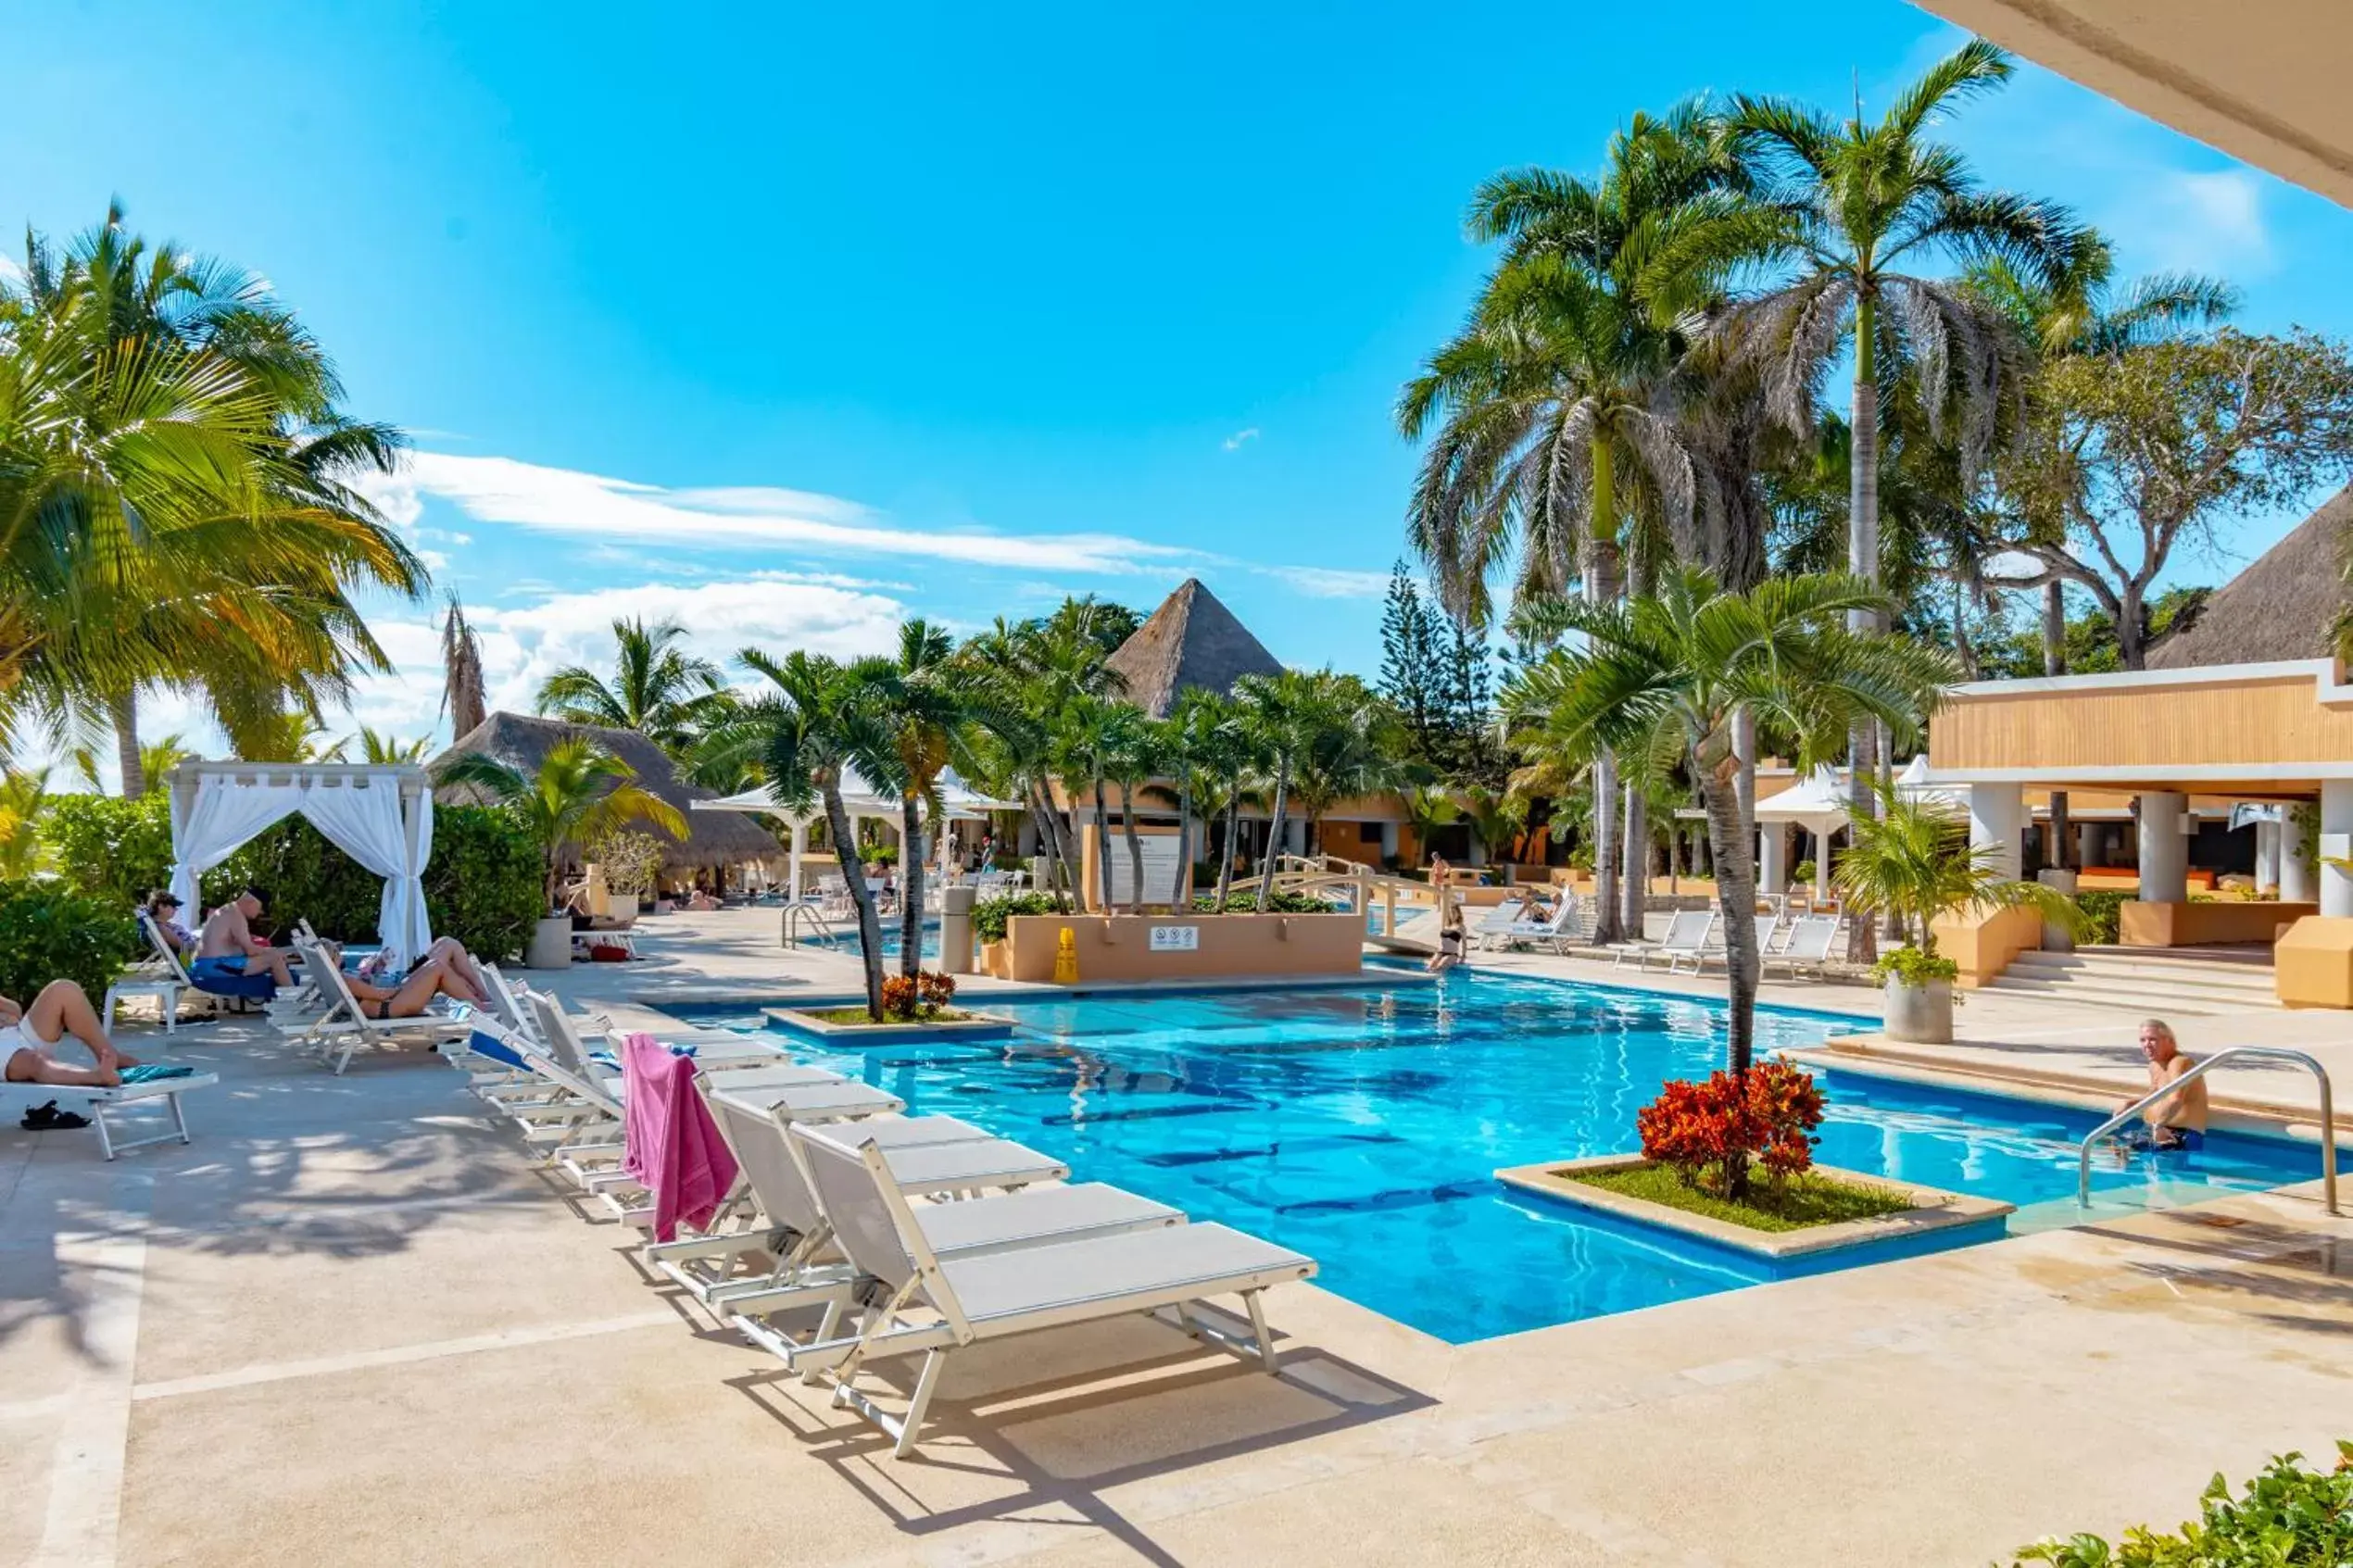 Swimming Pool in Puerto Aventuras Hotel & Beach Club